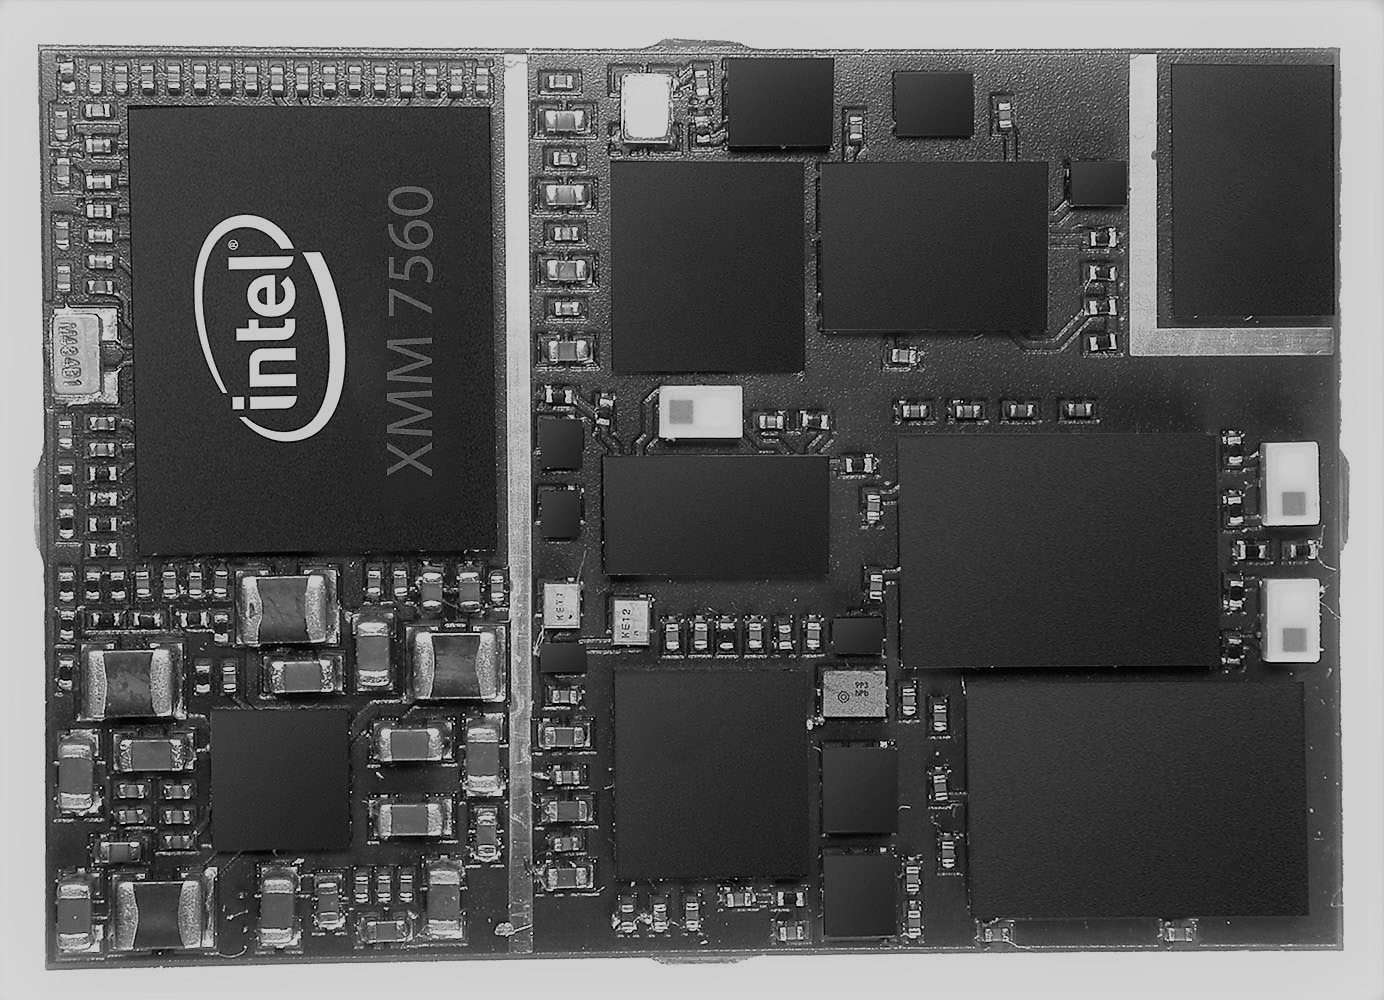 Modem XMM 7560, da Intel